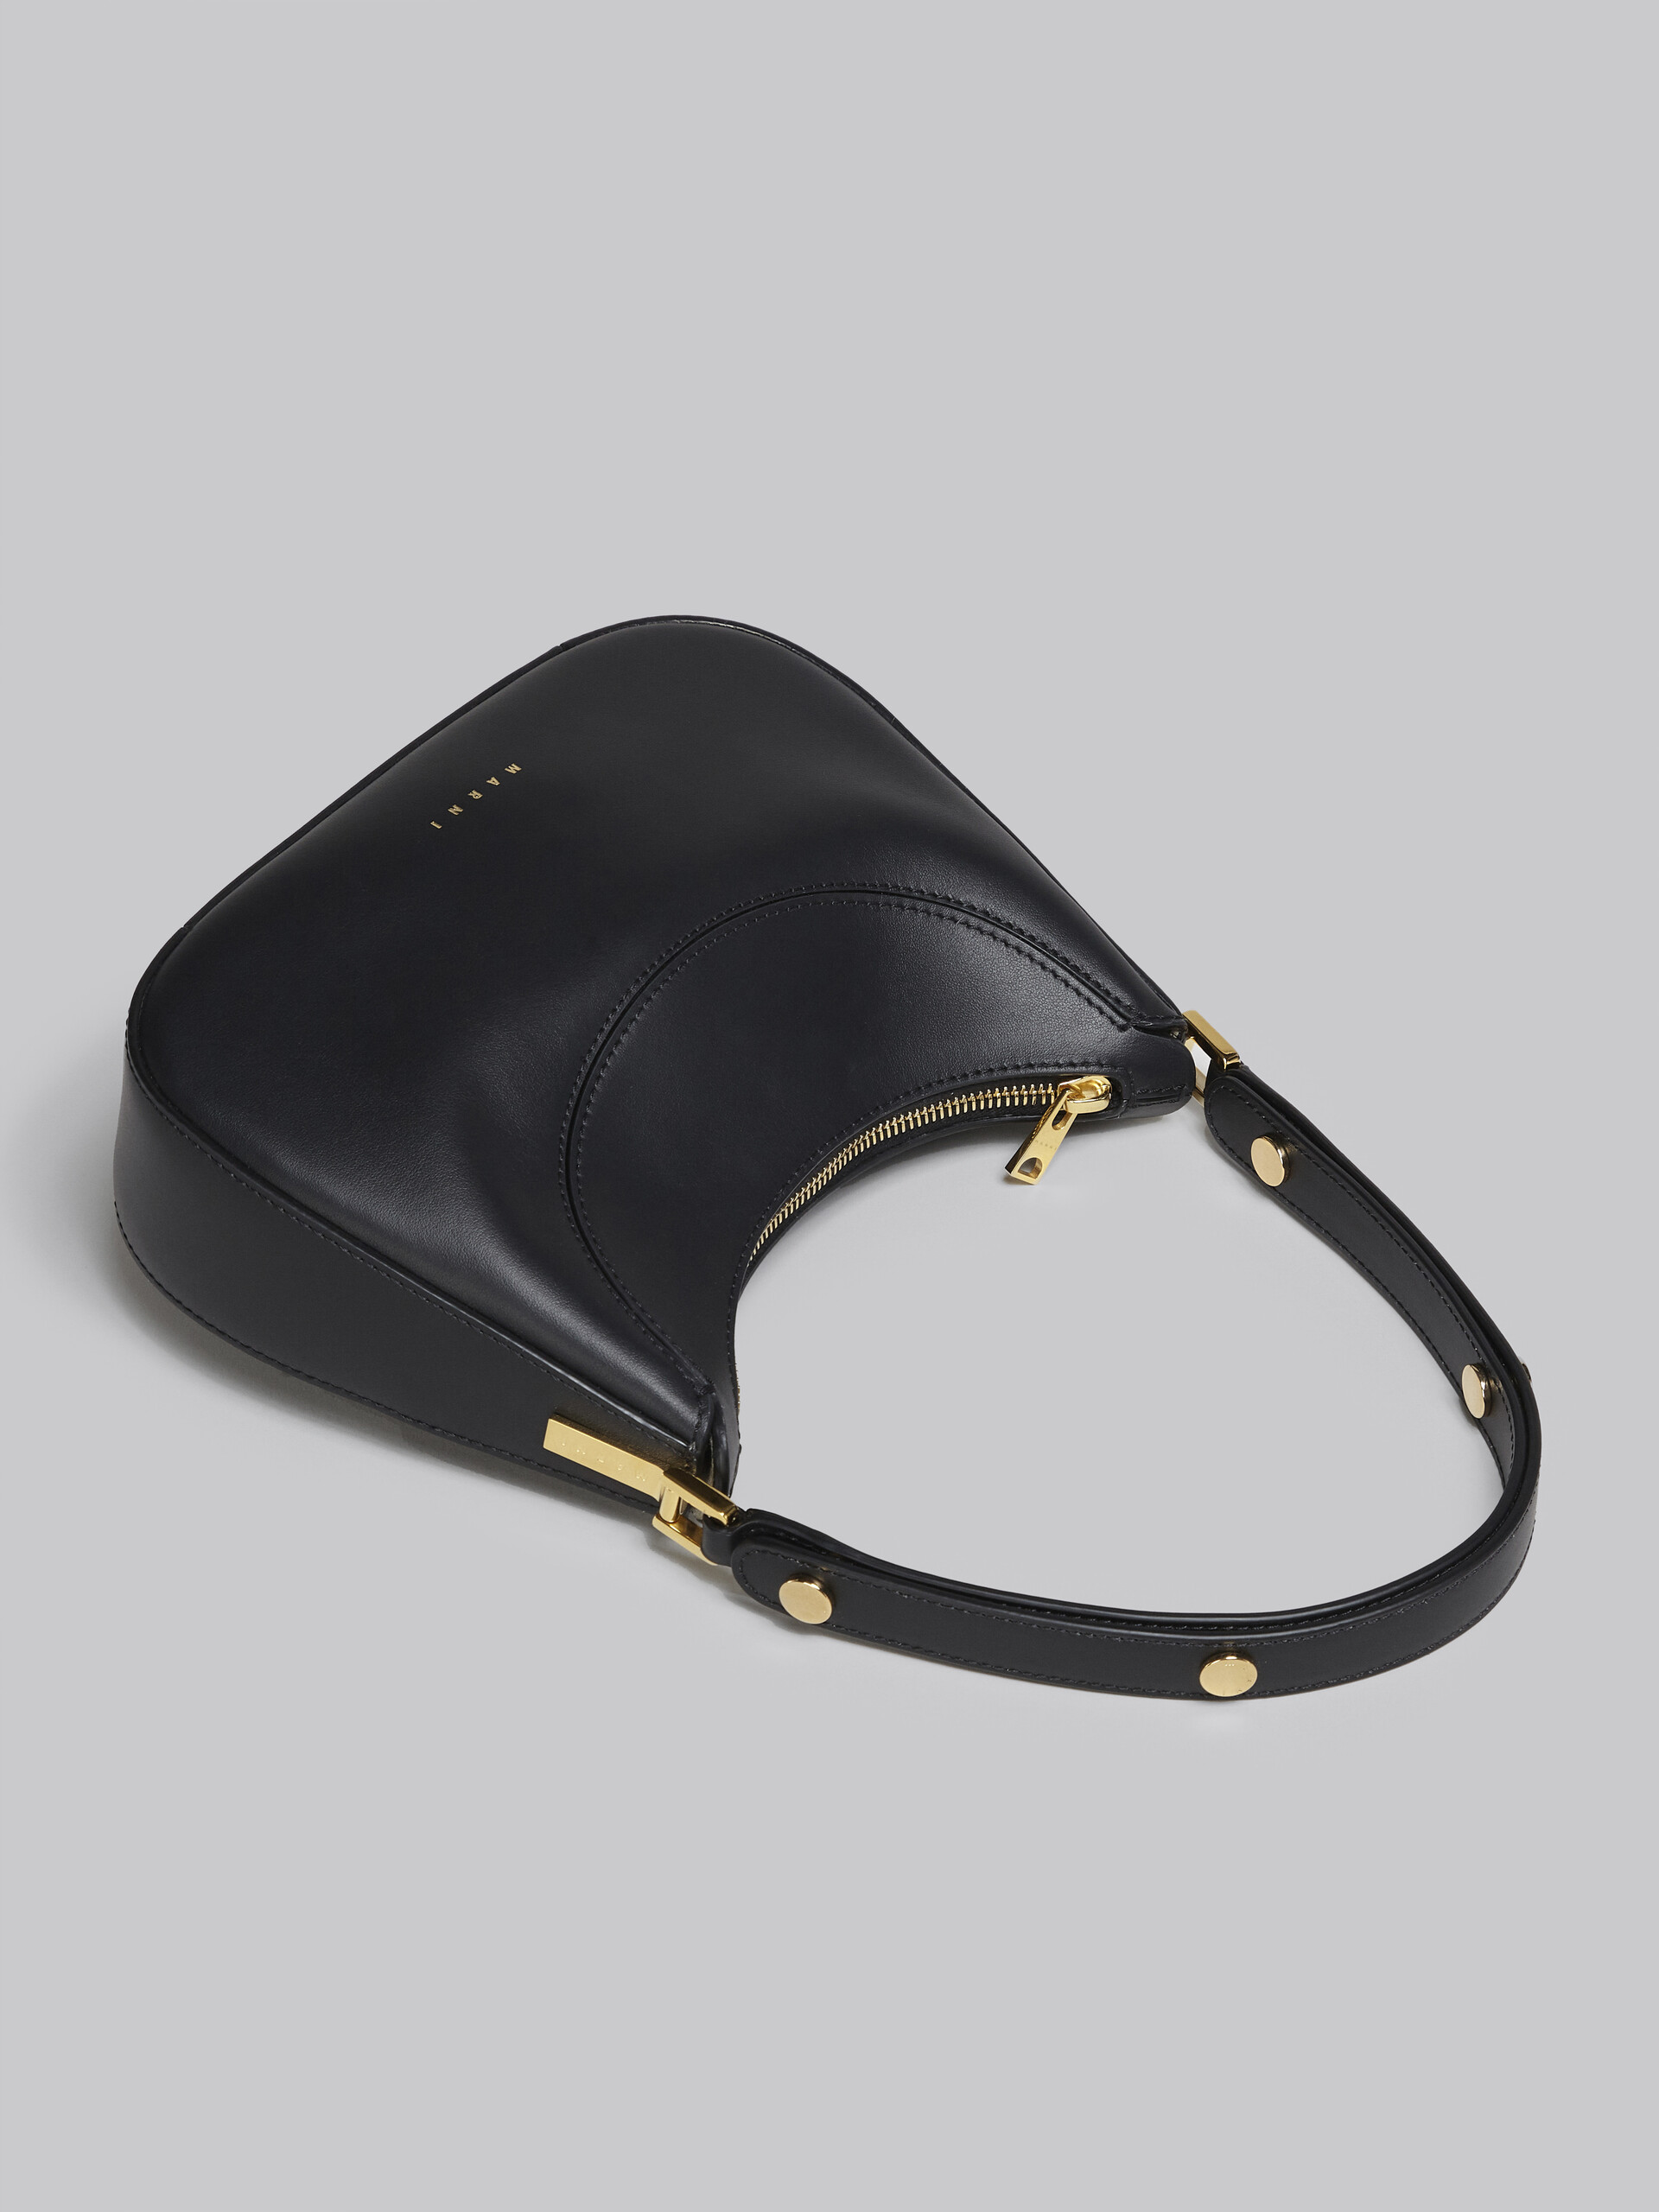 Milano mini bag in black leather - Handbags - Image 5